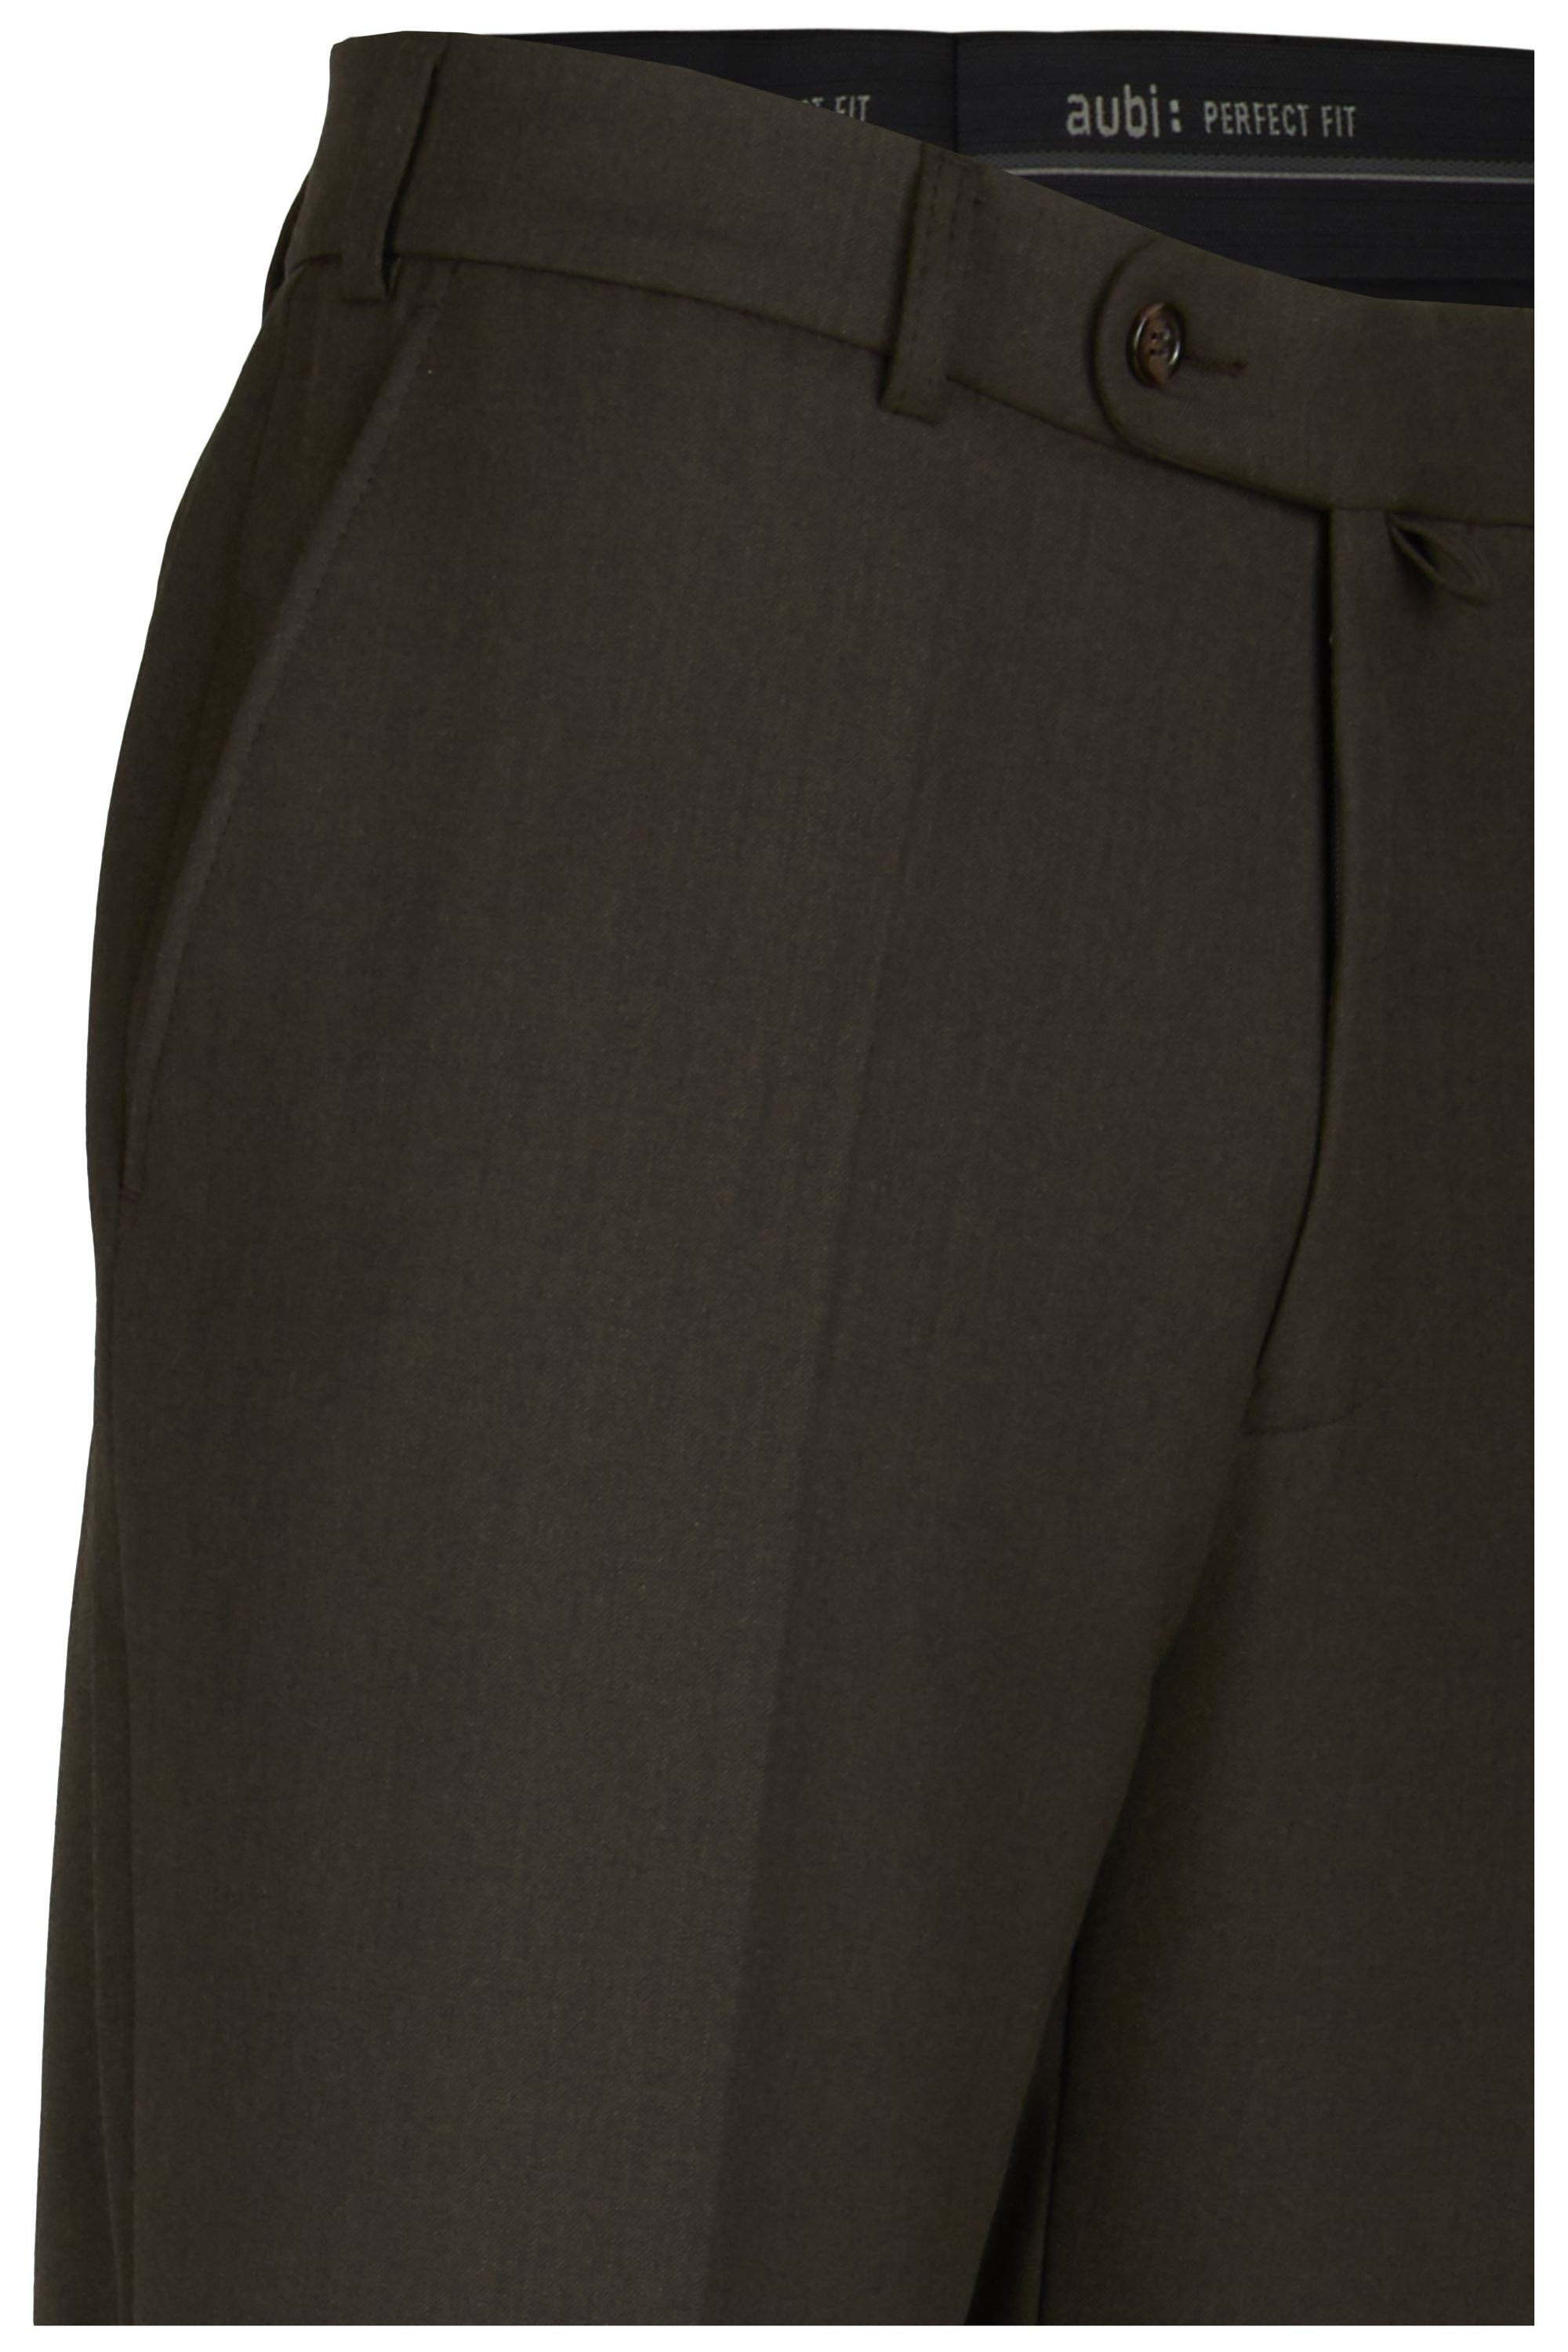 aubi: Stoffhose 26 (28) Herren Fit Flat Anzughose Perfect Front aubi Businesshose braun Modell